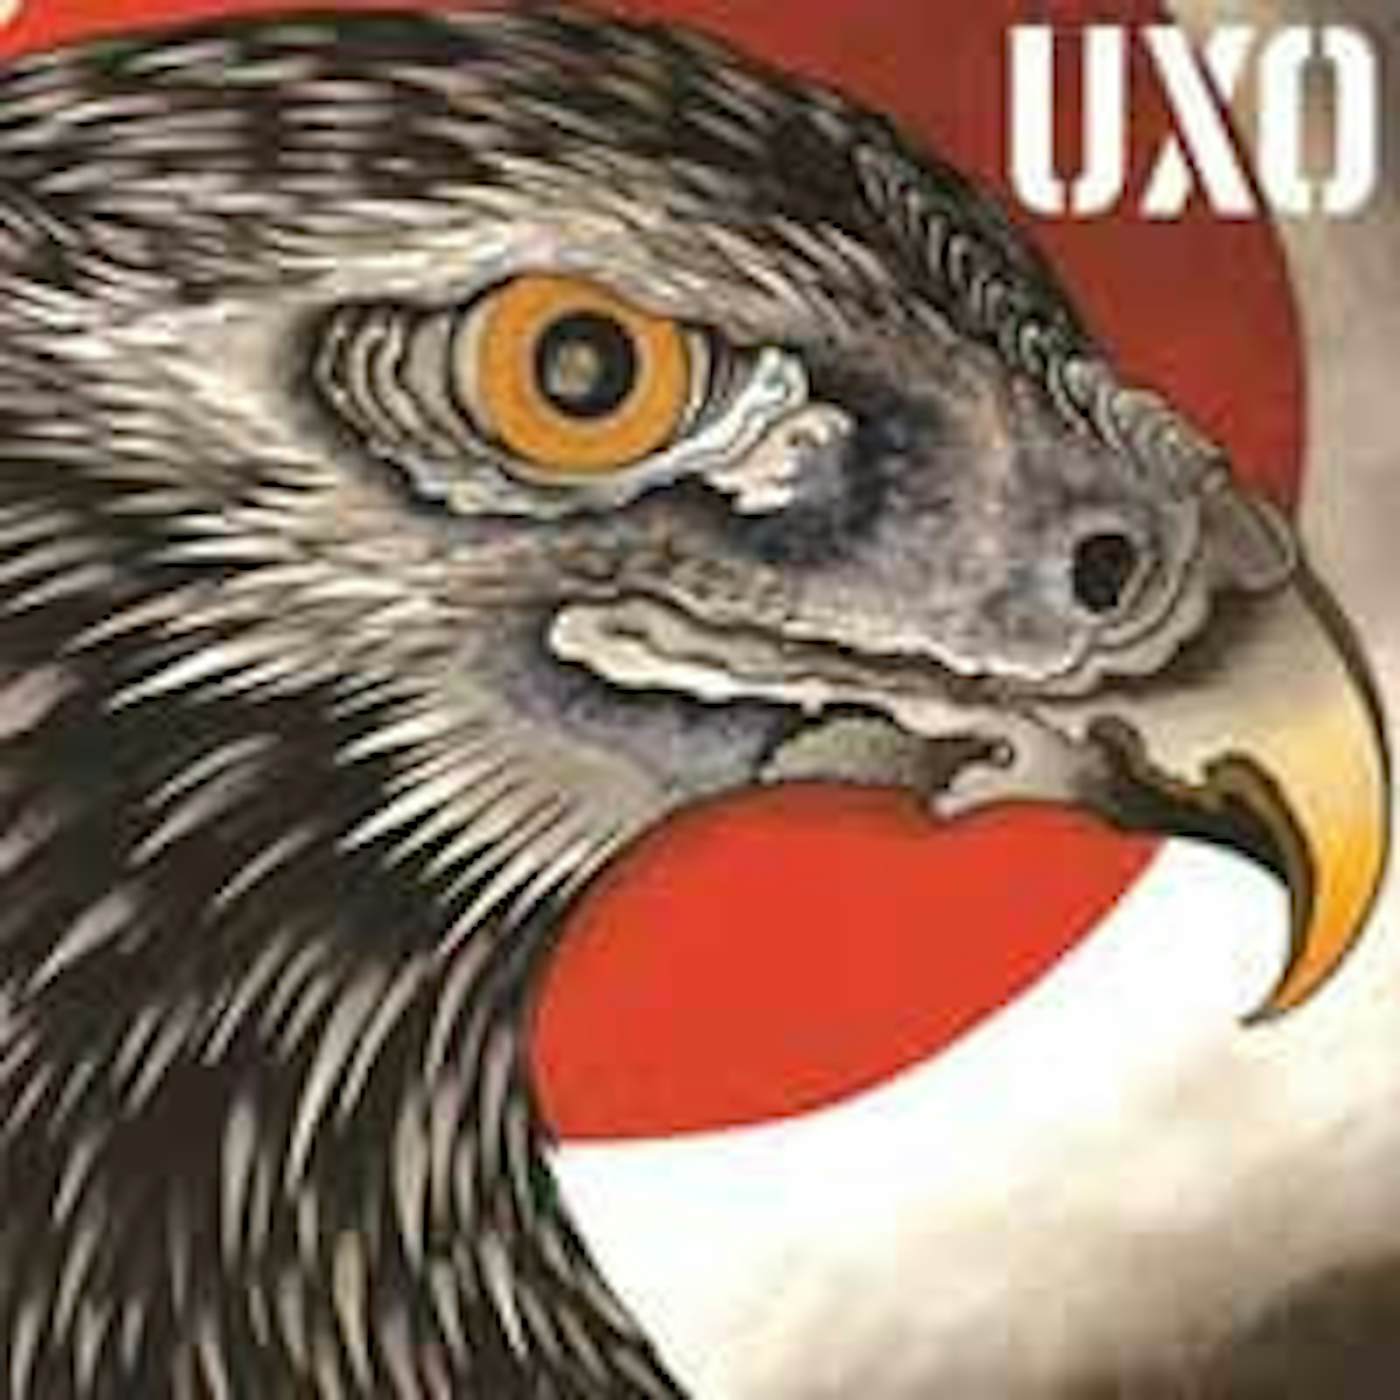 Uxo LP - Uxo (Vinyl)